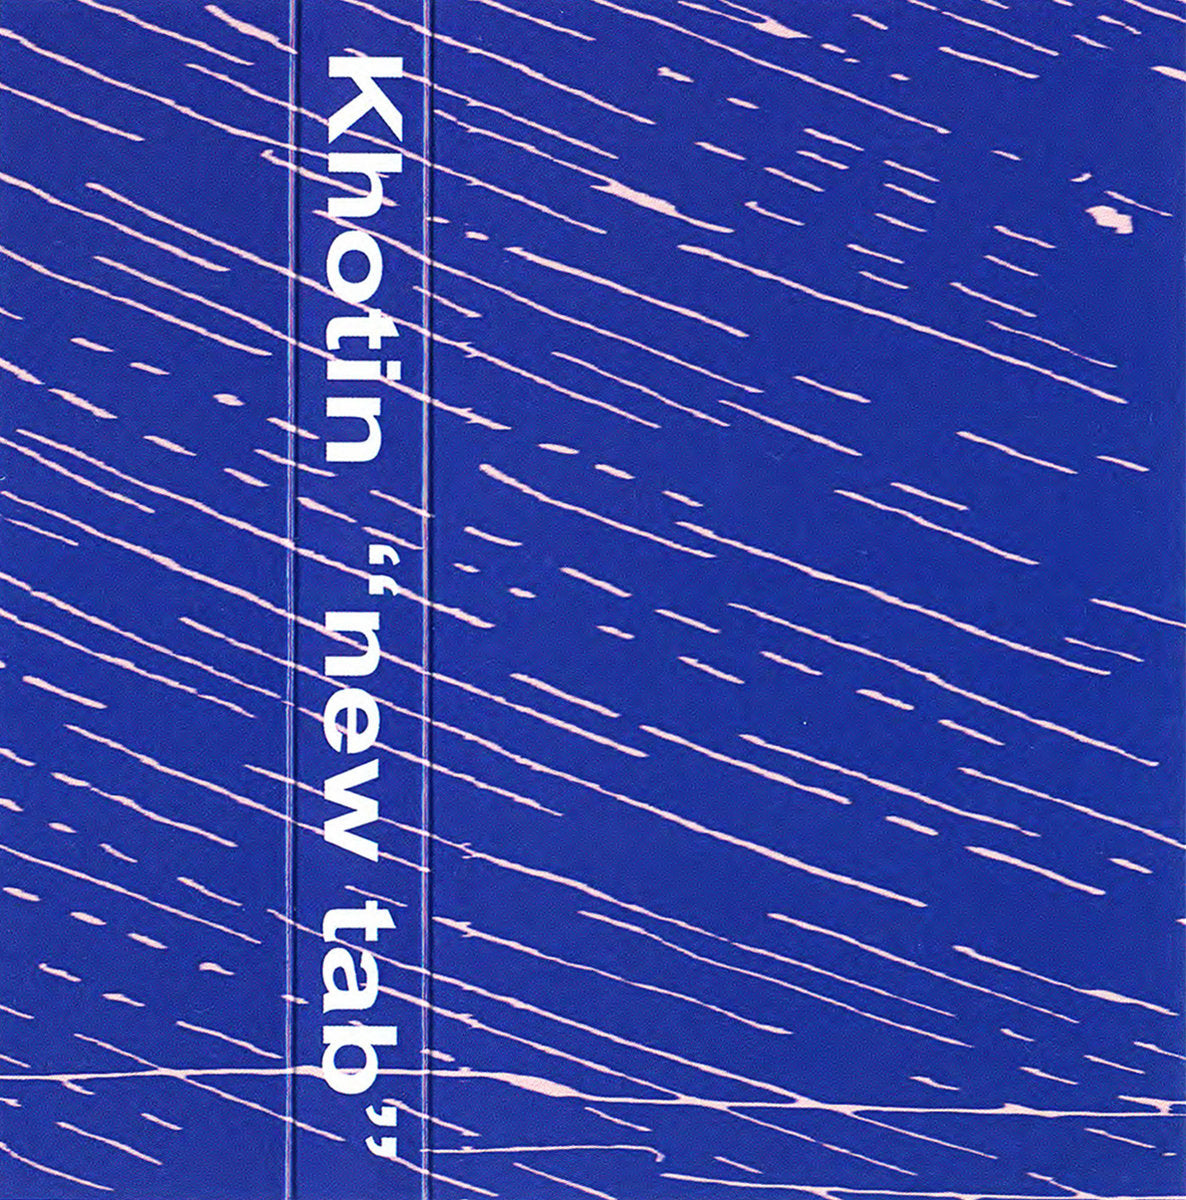 Khotin - New Tab